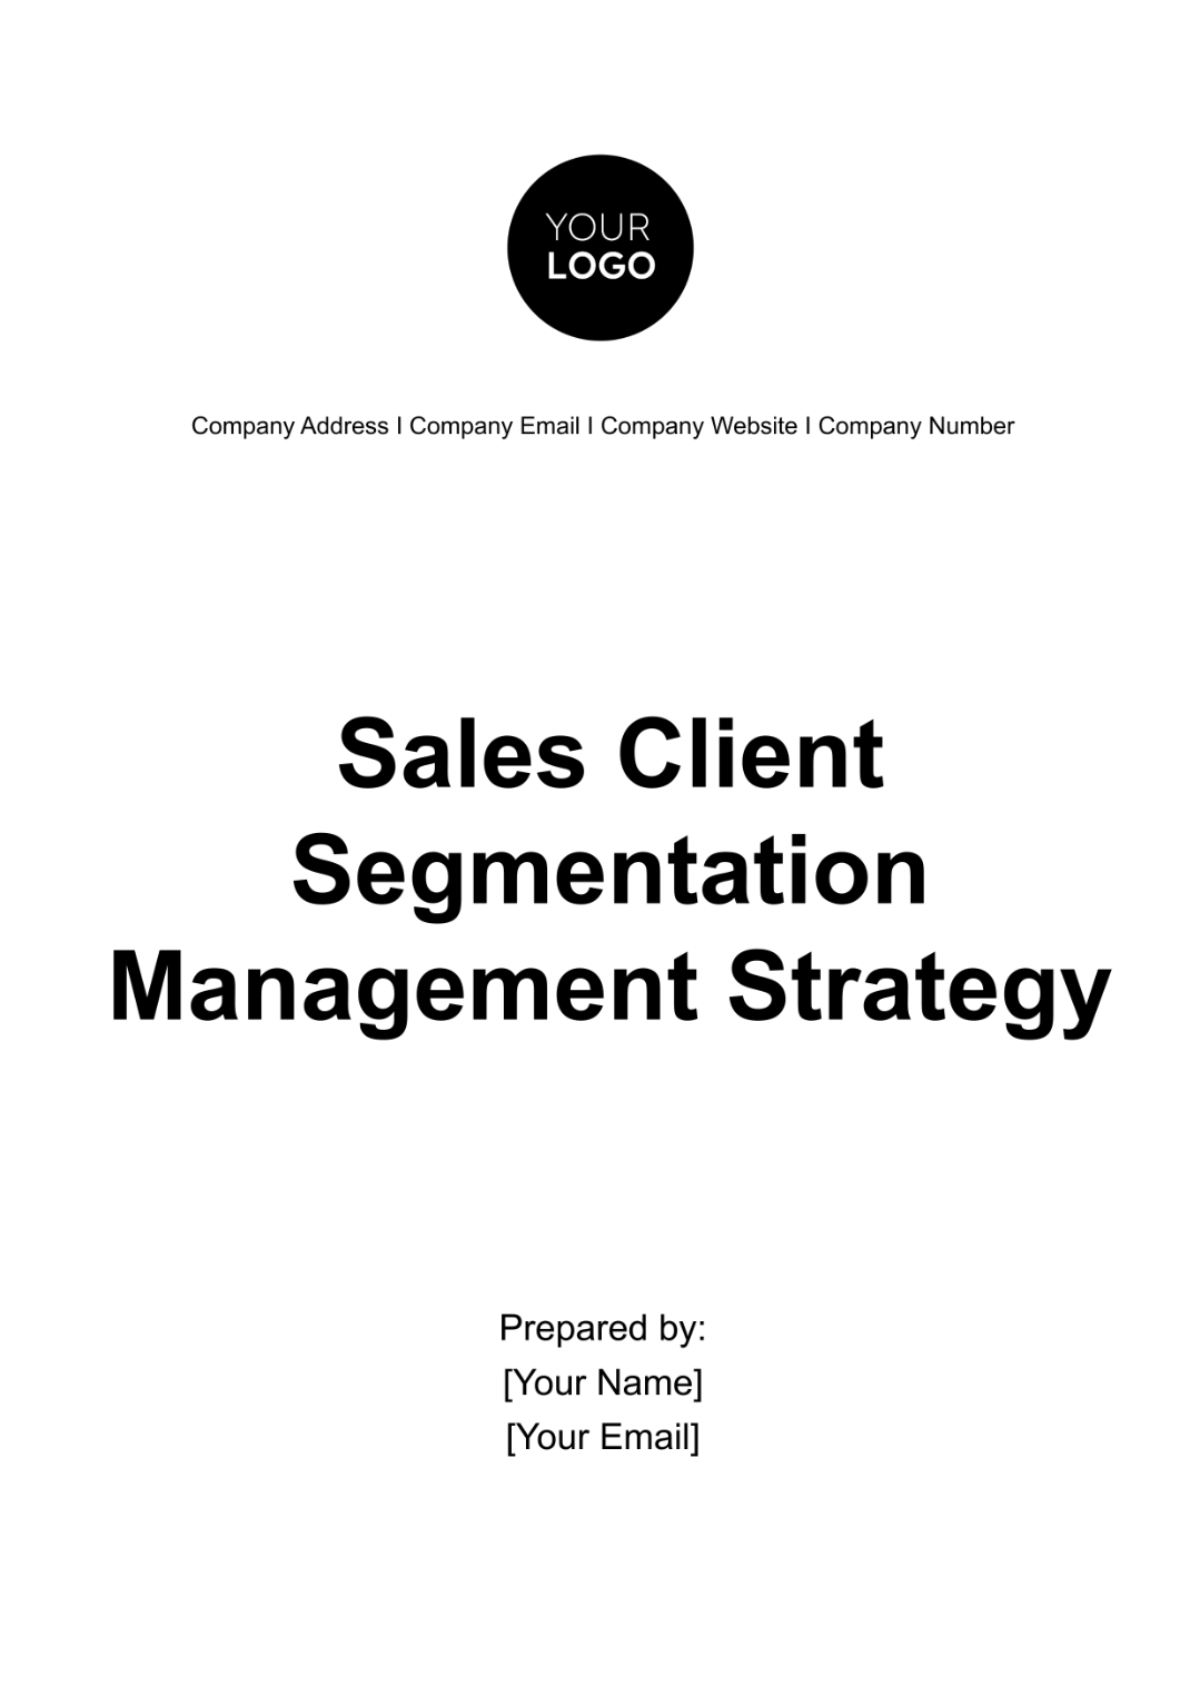 Sales Client Segmentation Management Strategy Template